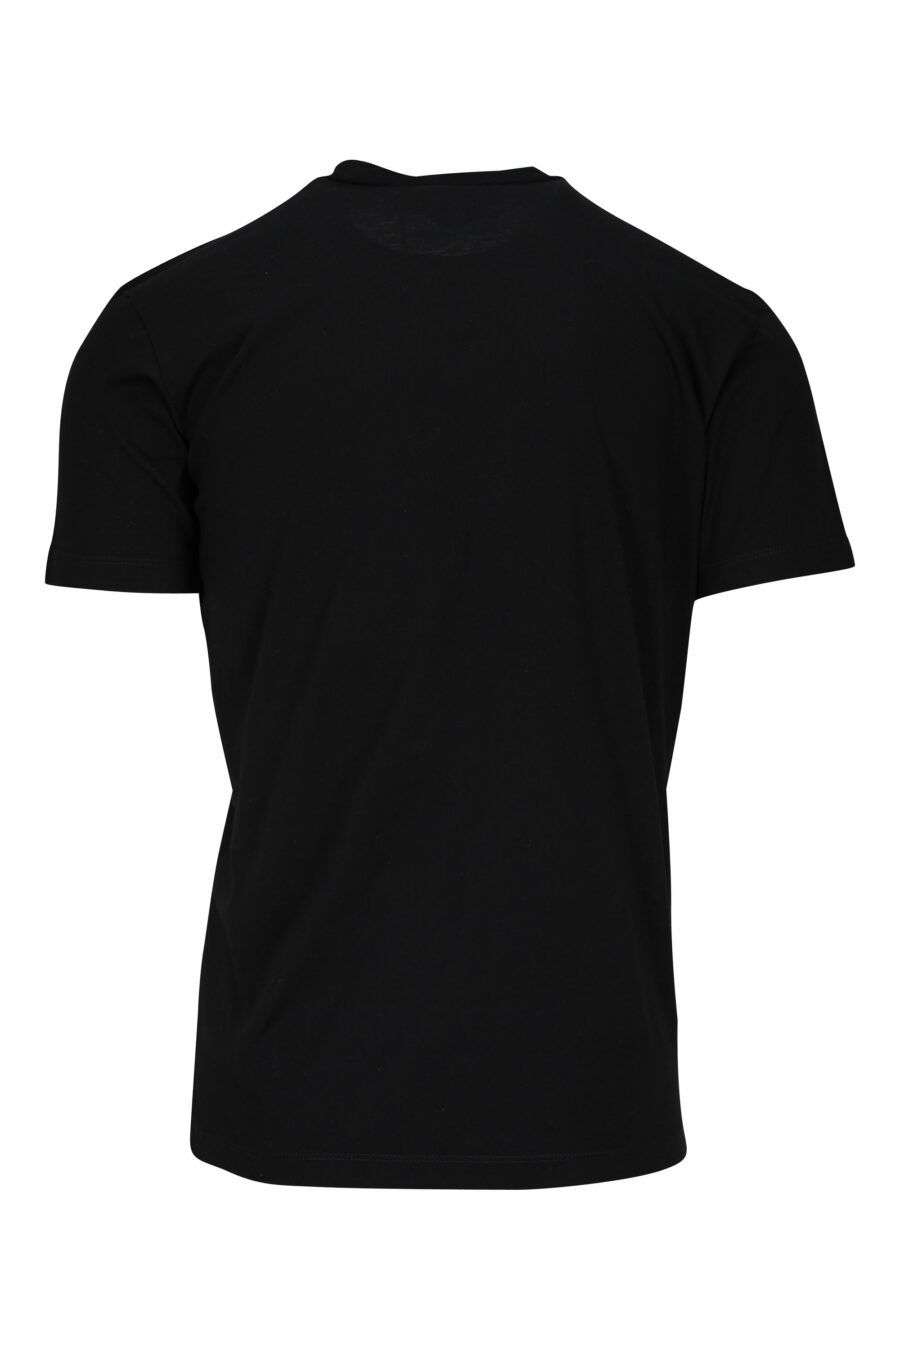 T-shirt preta com maxilogo rgb - 8052134941157 1